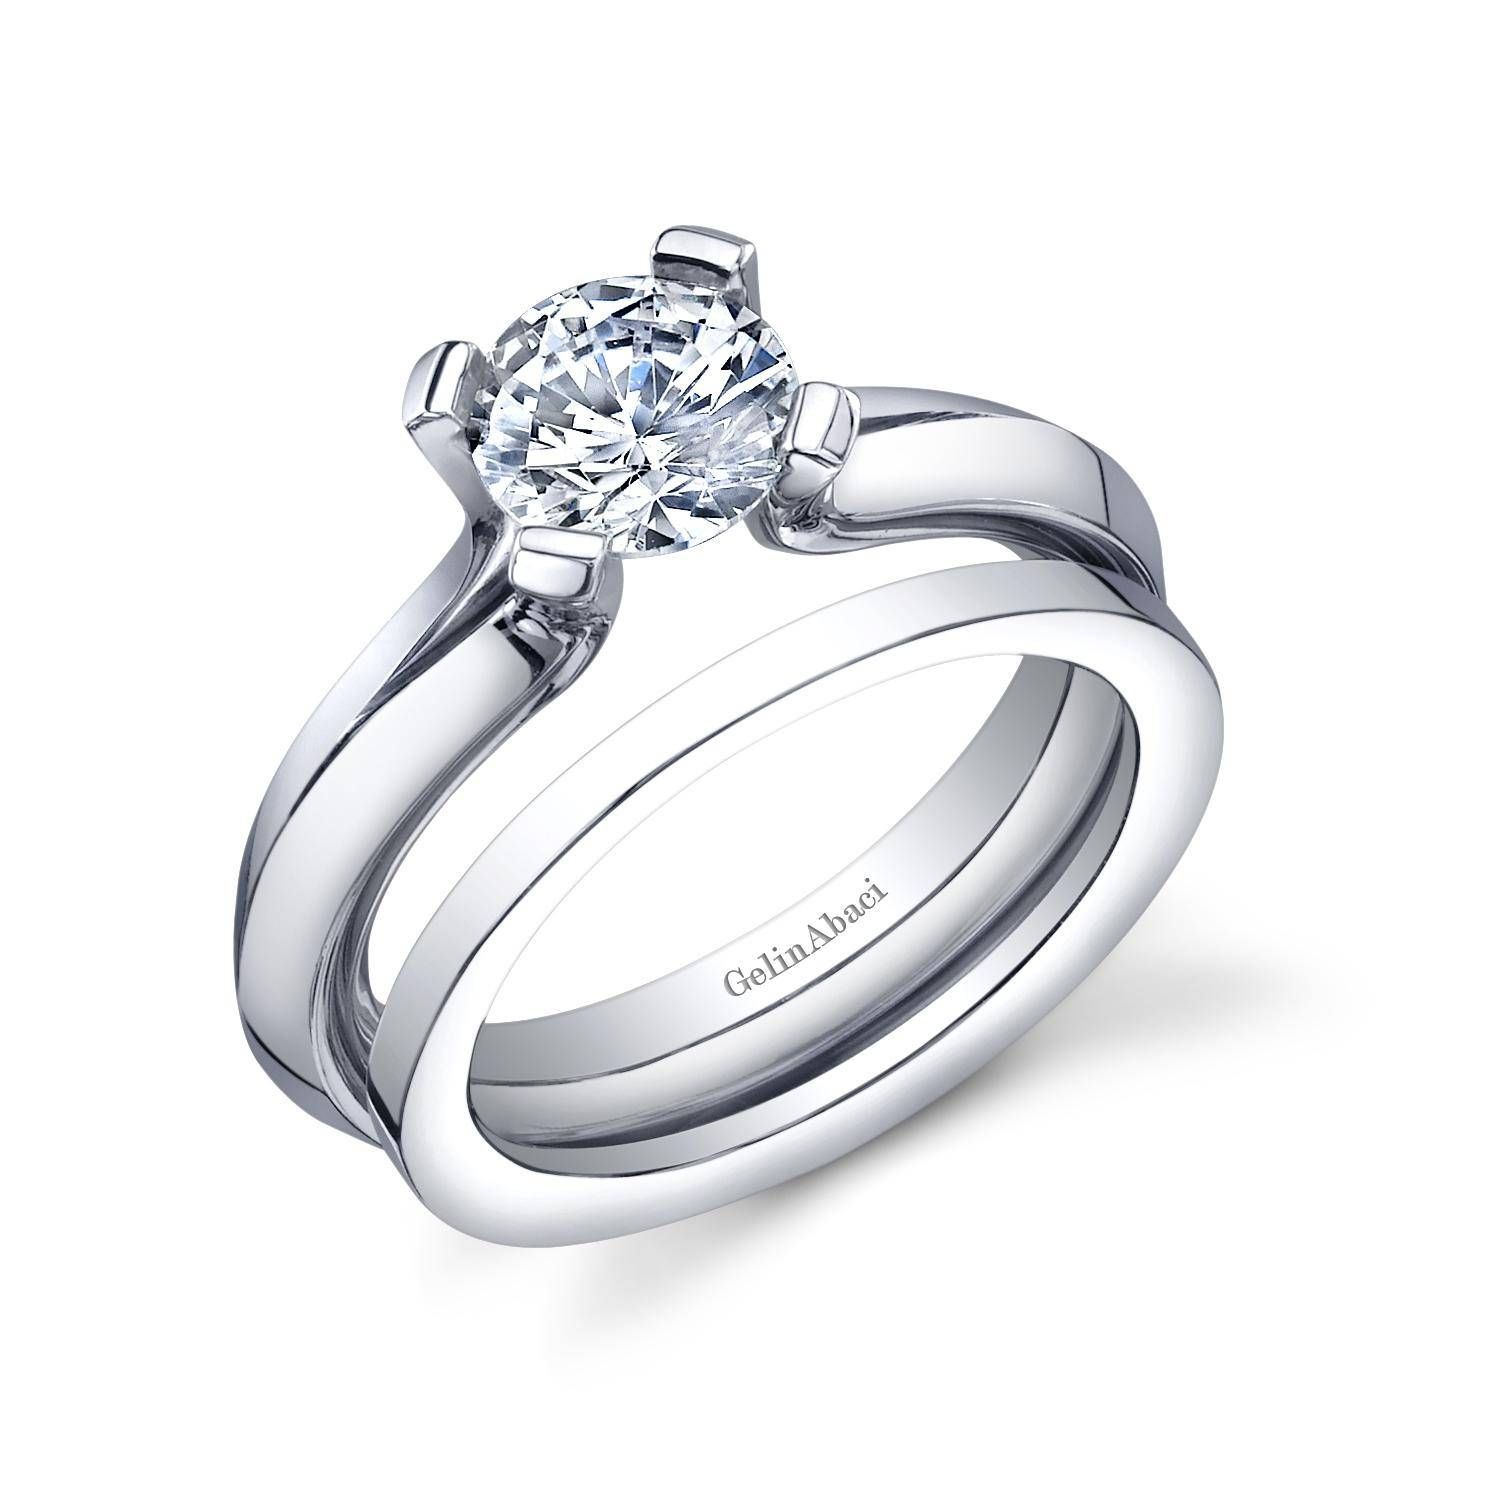 Engagement Ring Fits Inside Wedding Band 4 – Ifec Ci With Engagement Rings Inside Wedding Band (View 2 of 15)